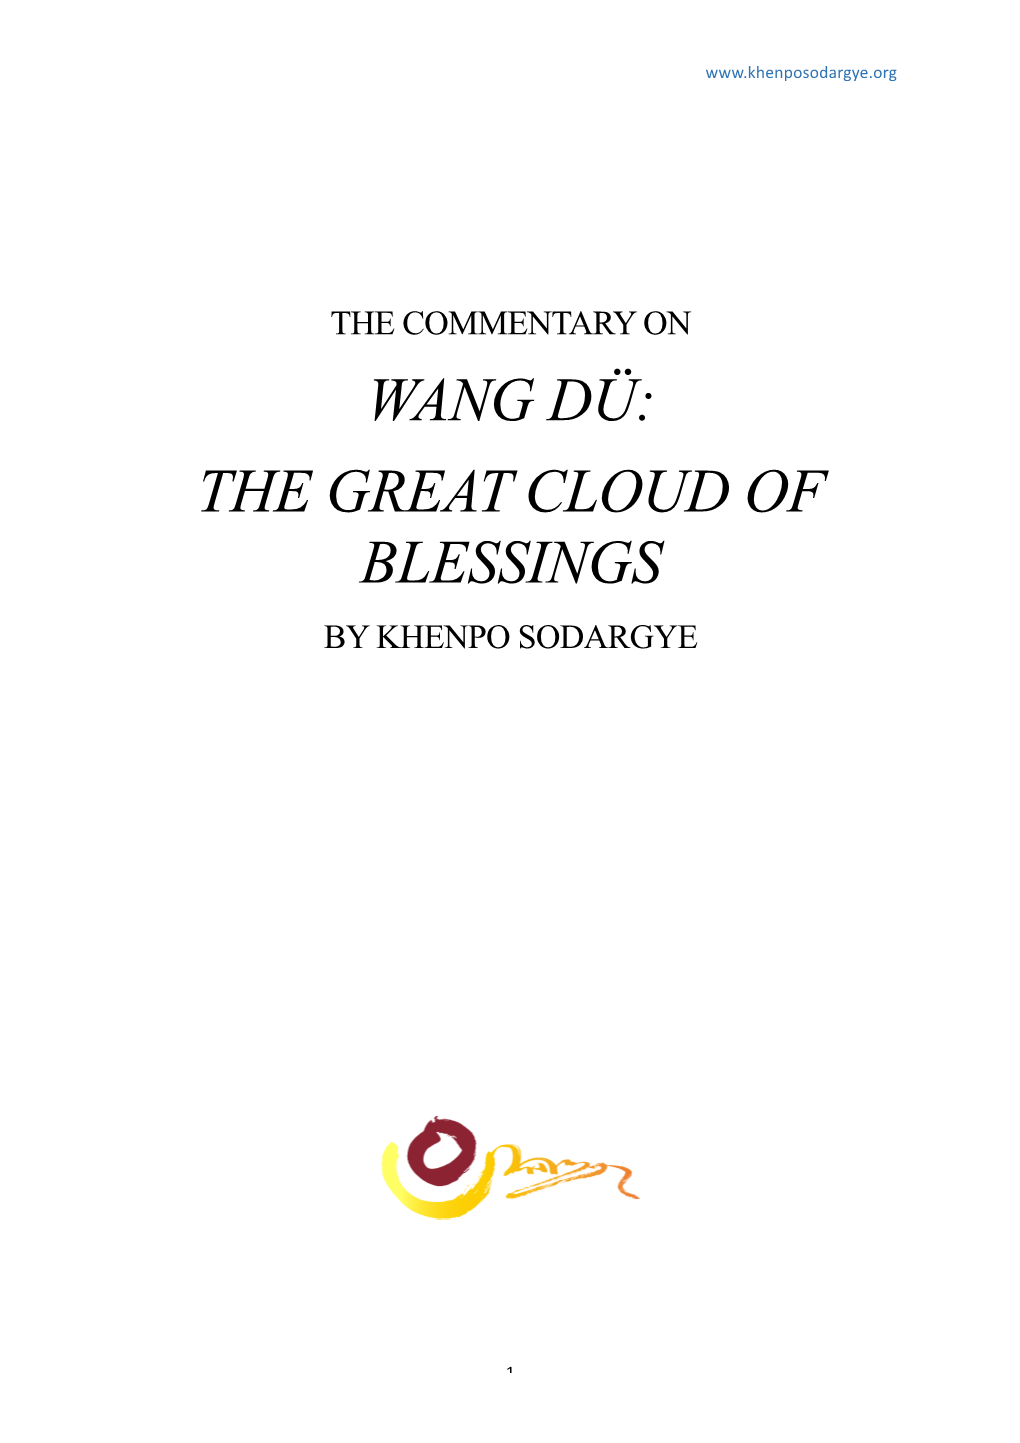 Wang Dü: the Great Cloud of Blessings by Khenpo Sodargye